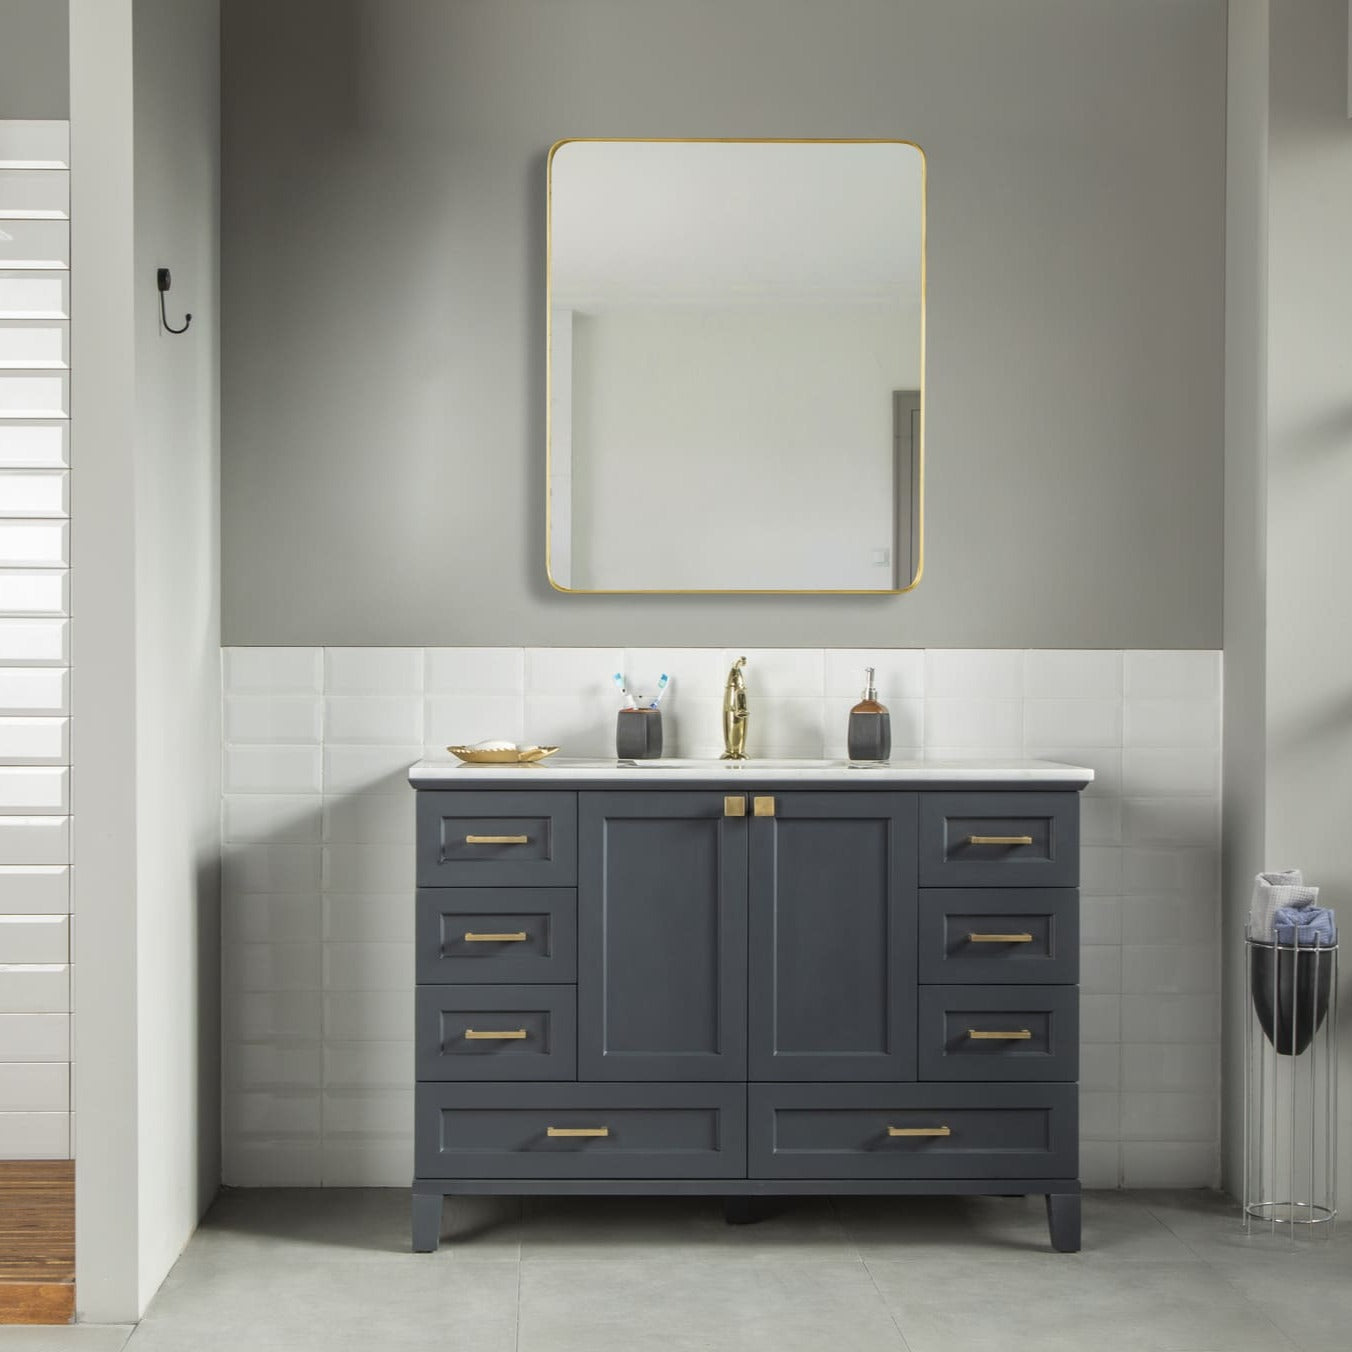 Paloma Bathroom Cabinets  Homelero 48"  #size_48"  #color_dark grey  #hardware_brass